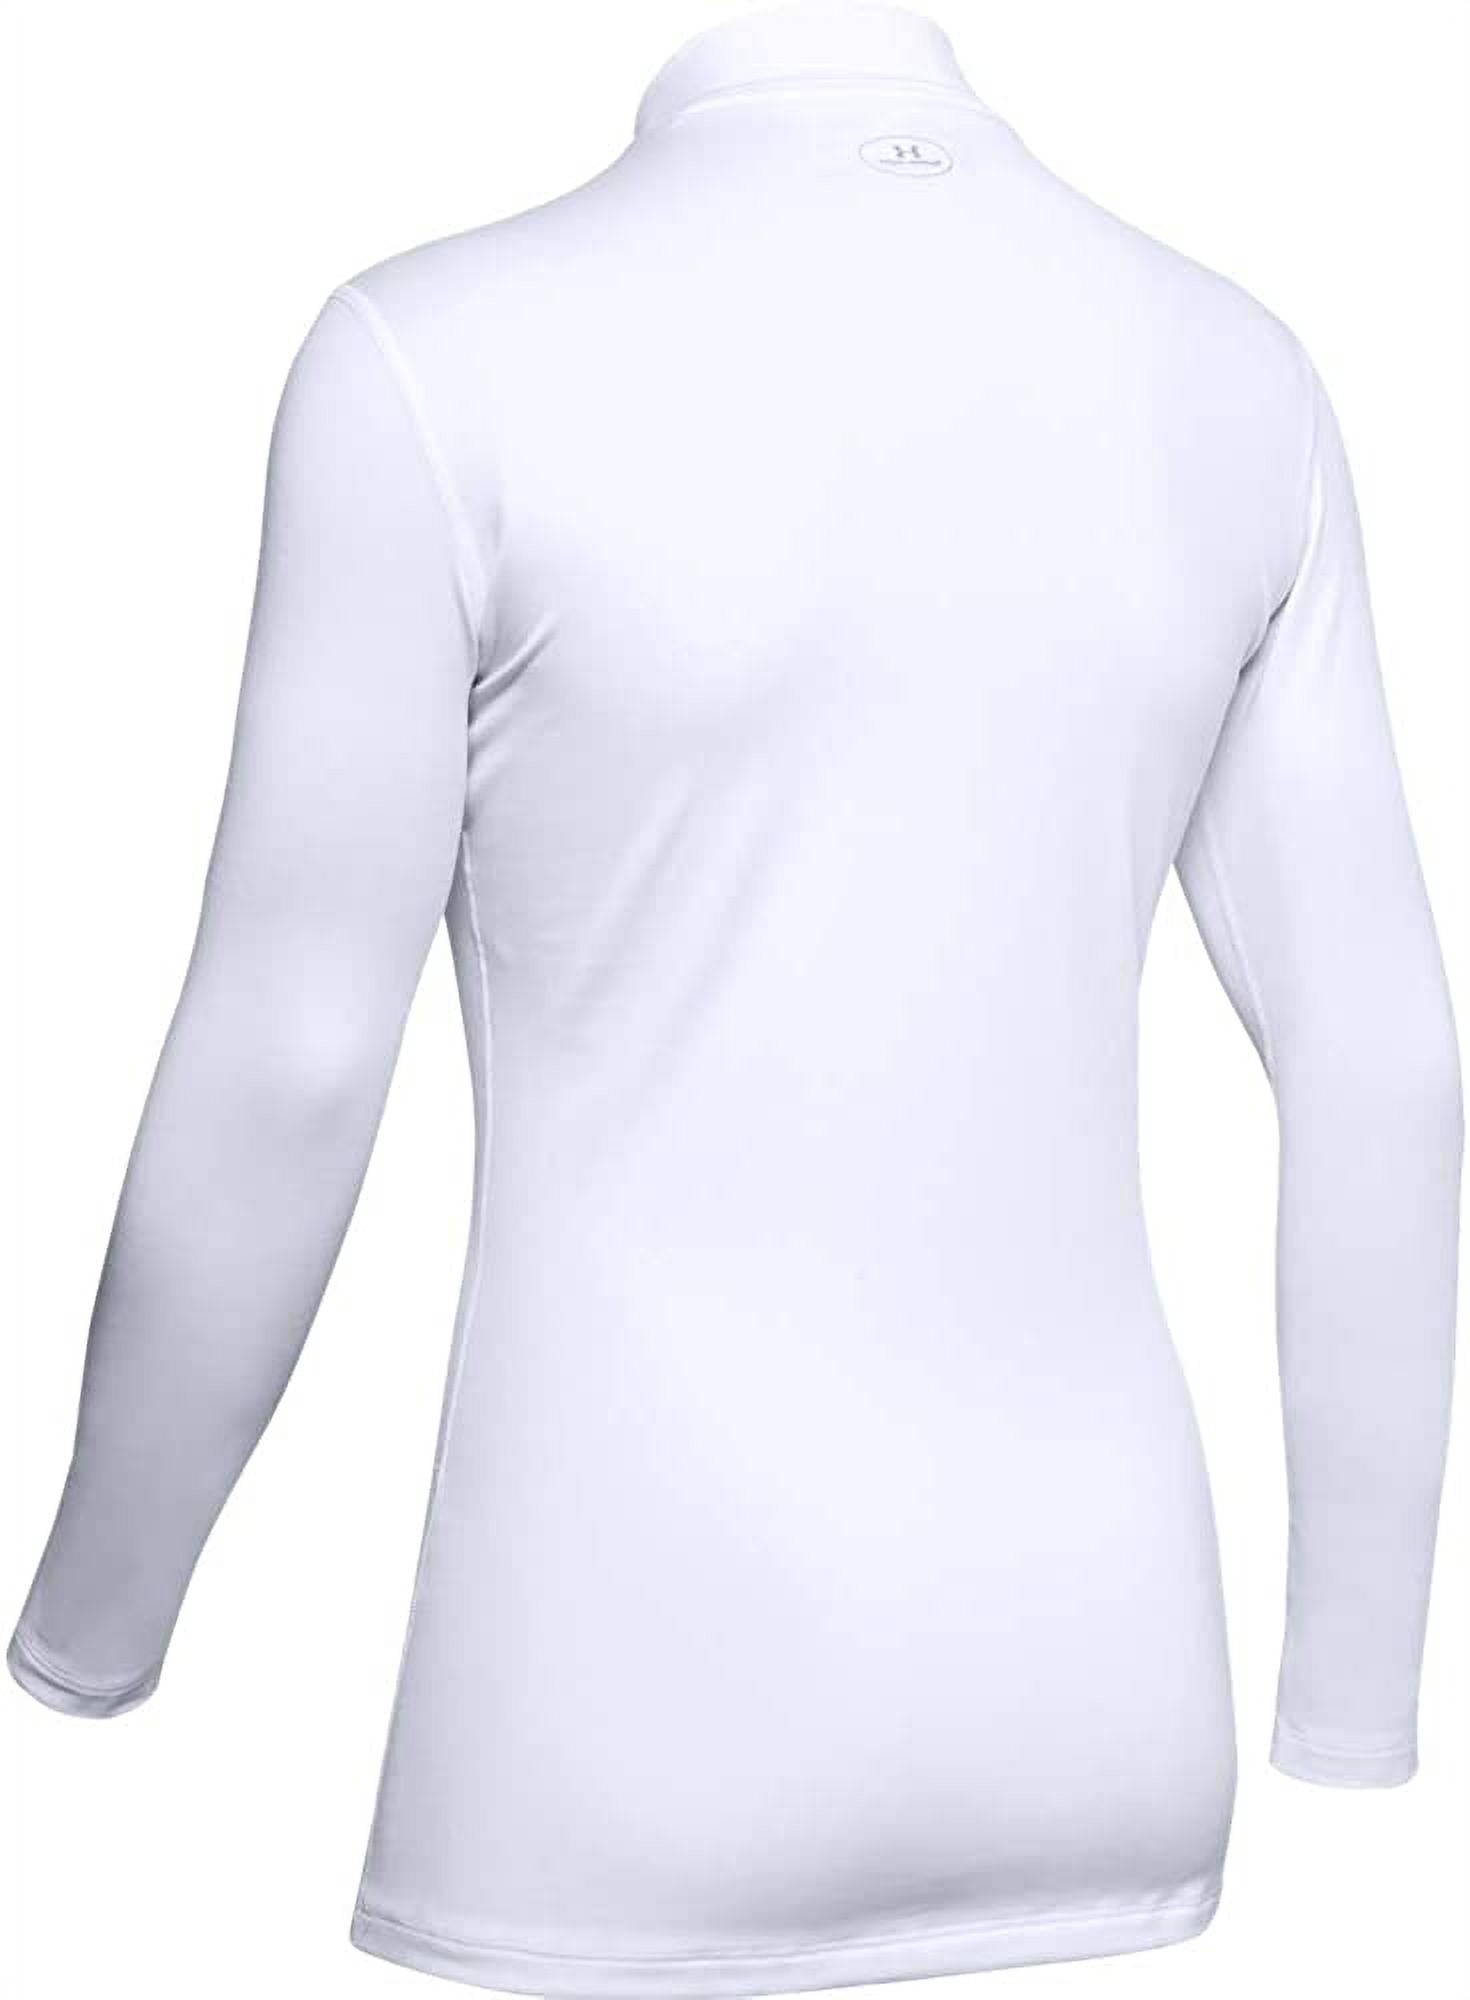 Under Armour Women ColdGear Authentics Mock Long Sleeve Shirt White X-Large  - Walmart.com